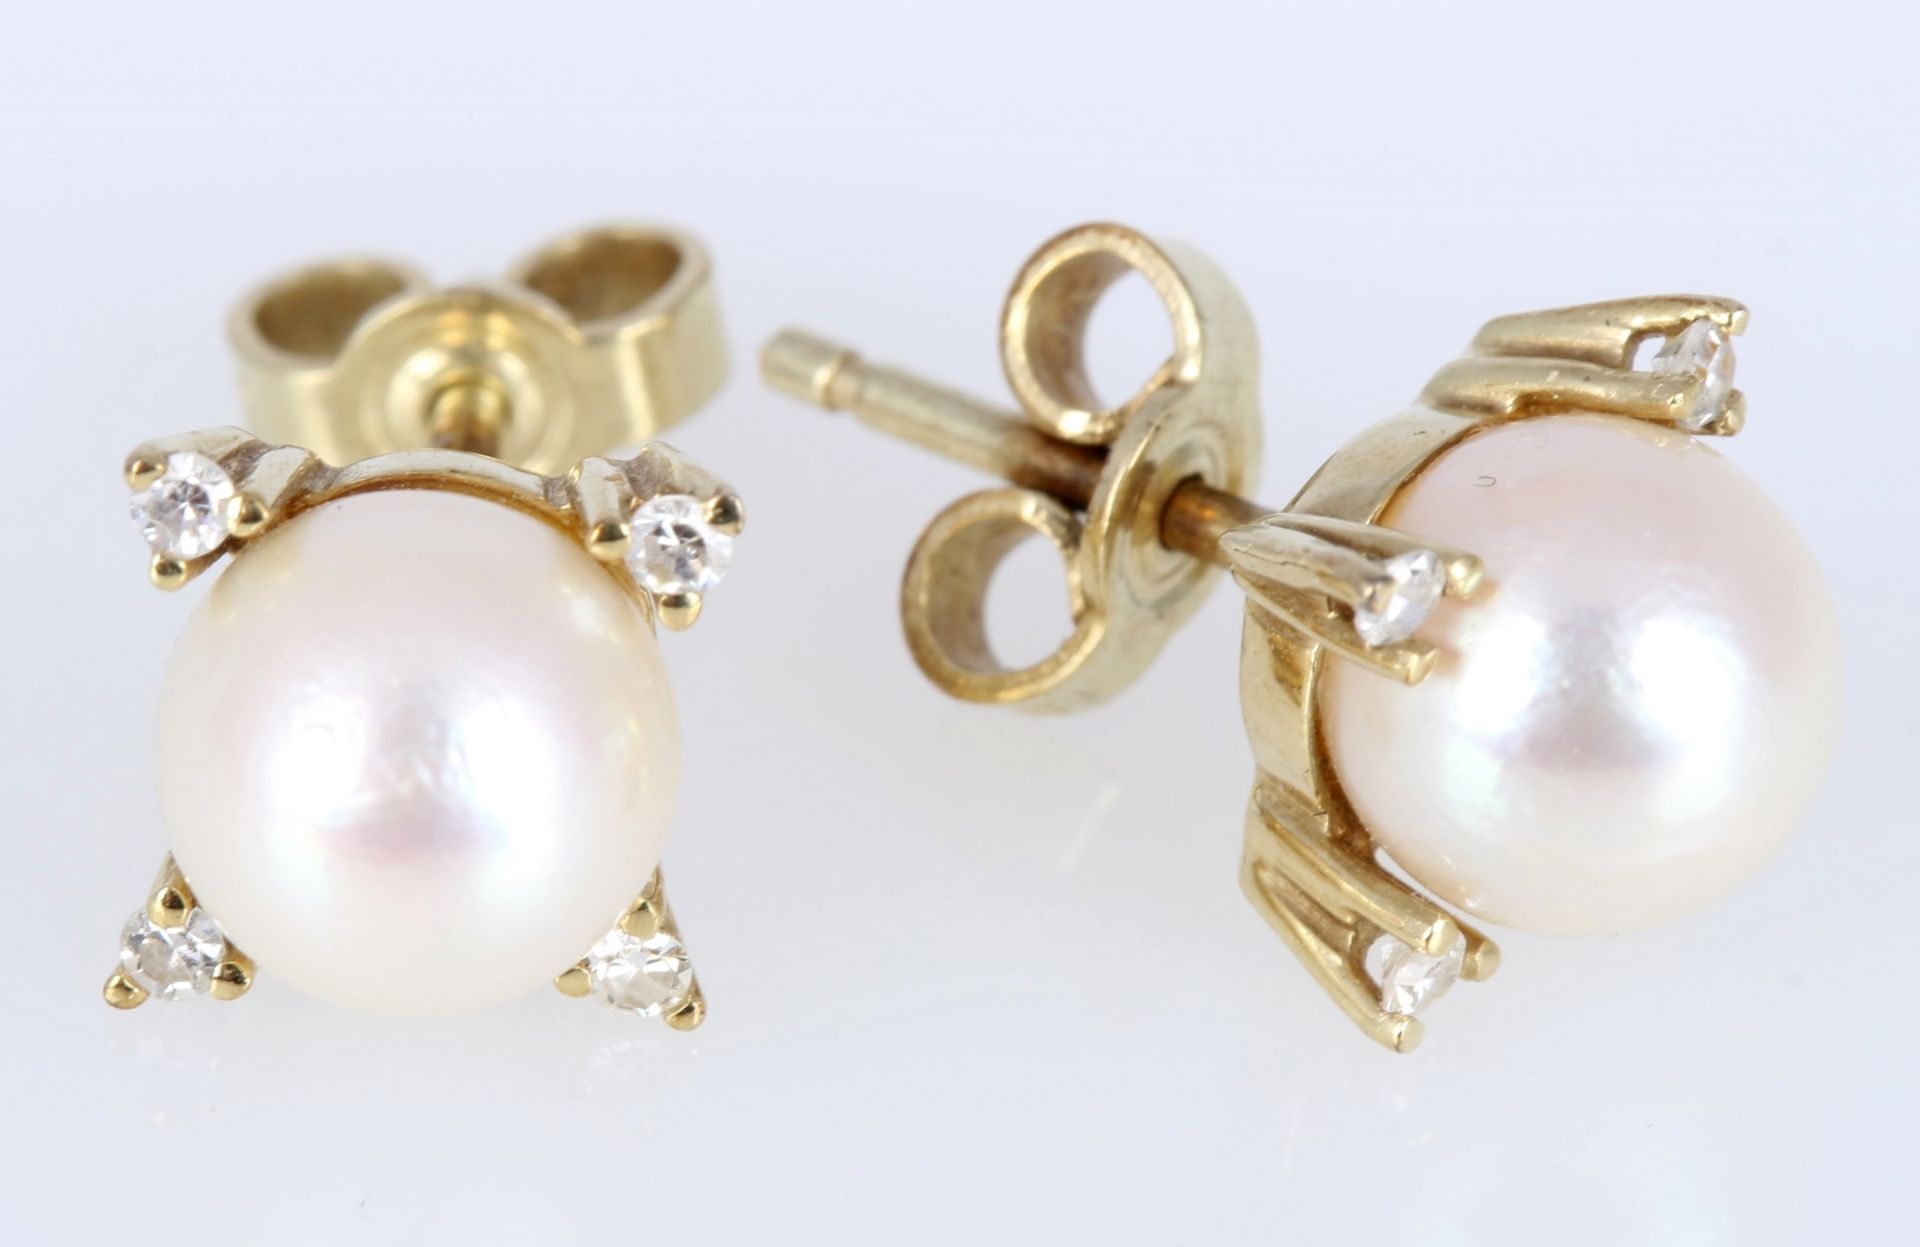 585 Gold Ohrstecker mit Perle und Brillanten, 14K gold ear studs with pearls and diamonds,